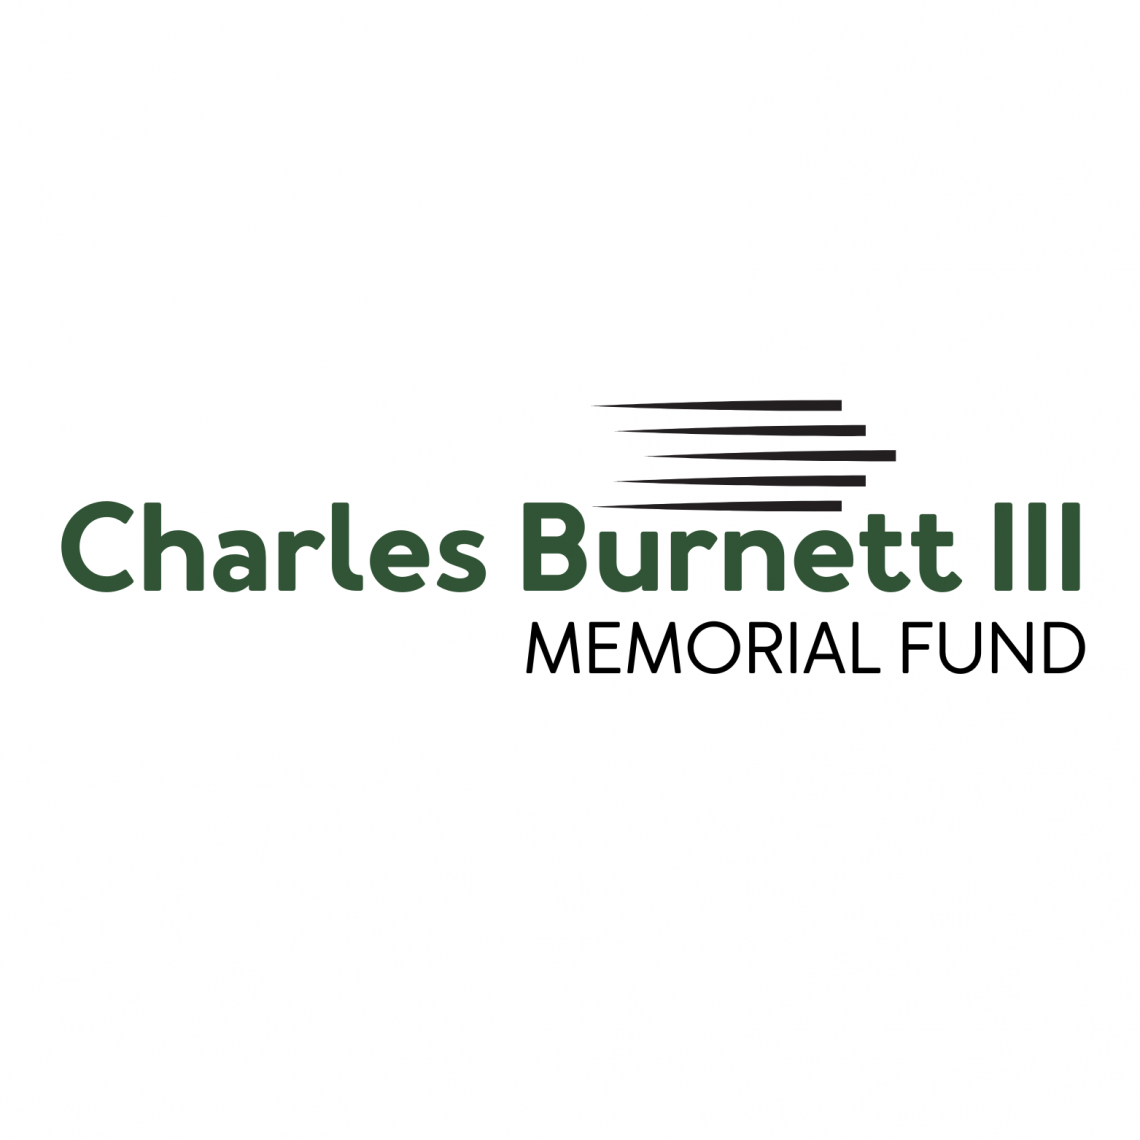 Charles Burnett III Memorial Fund